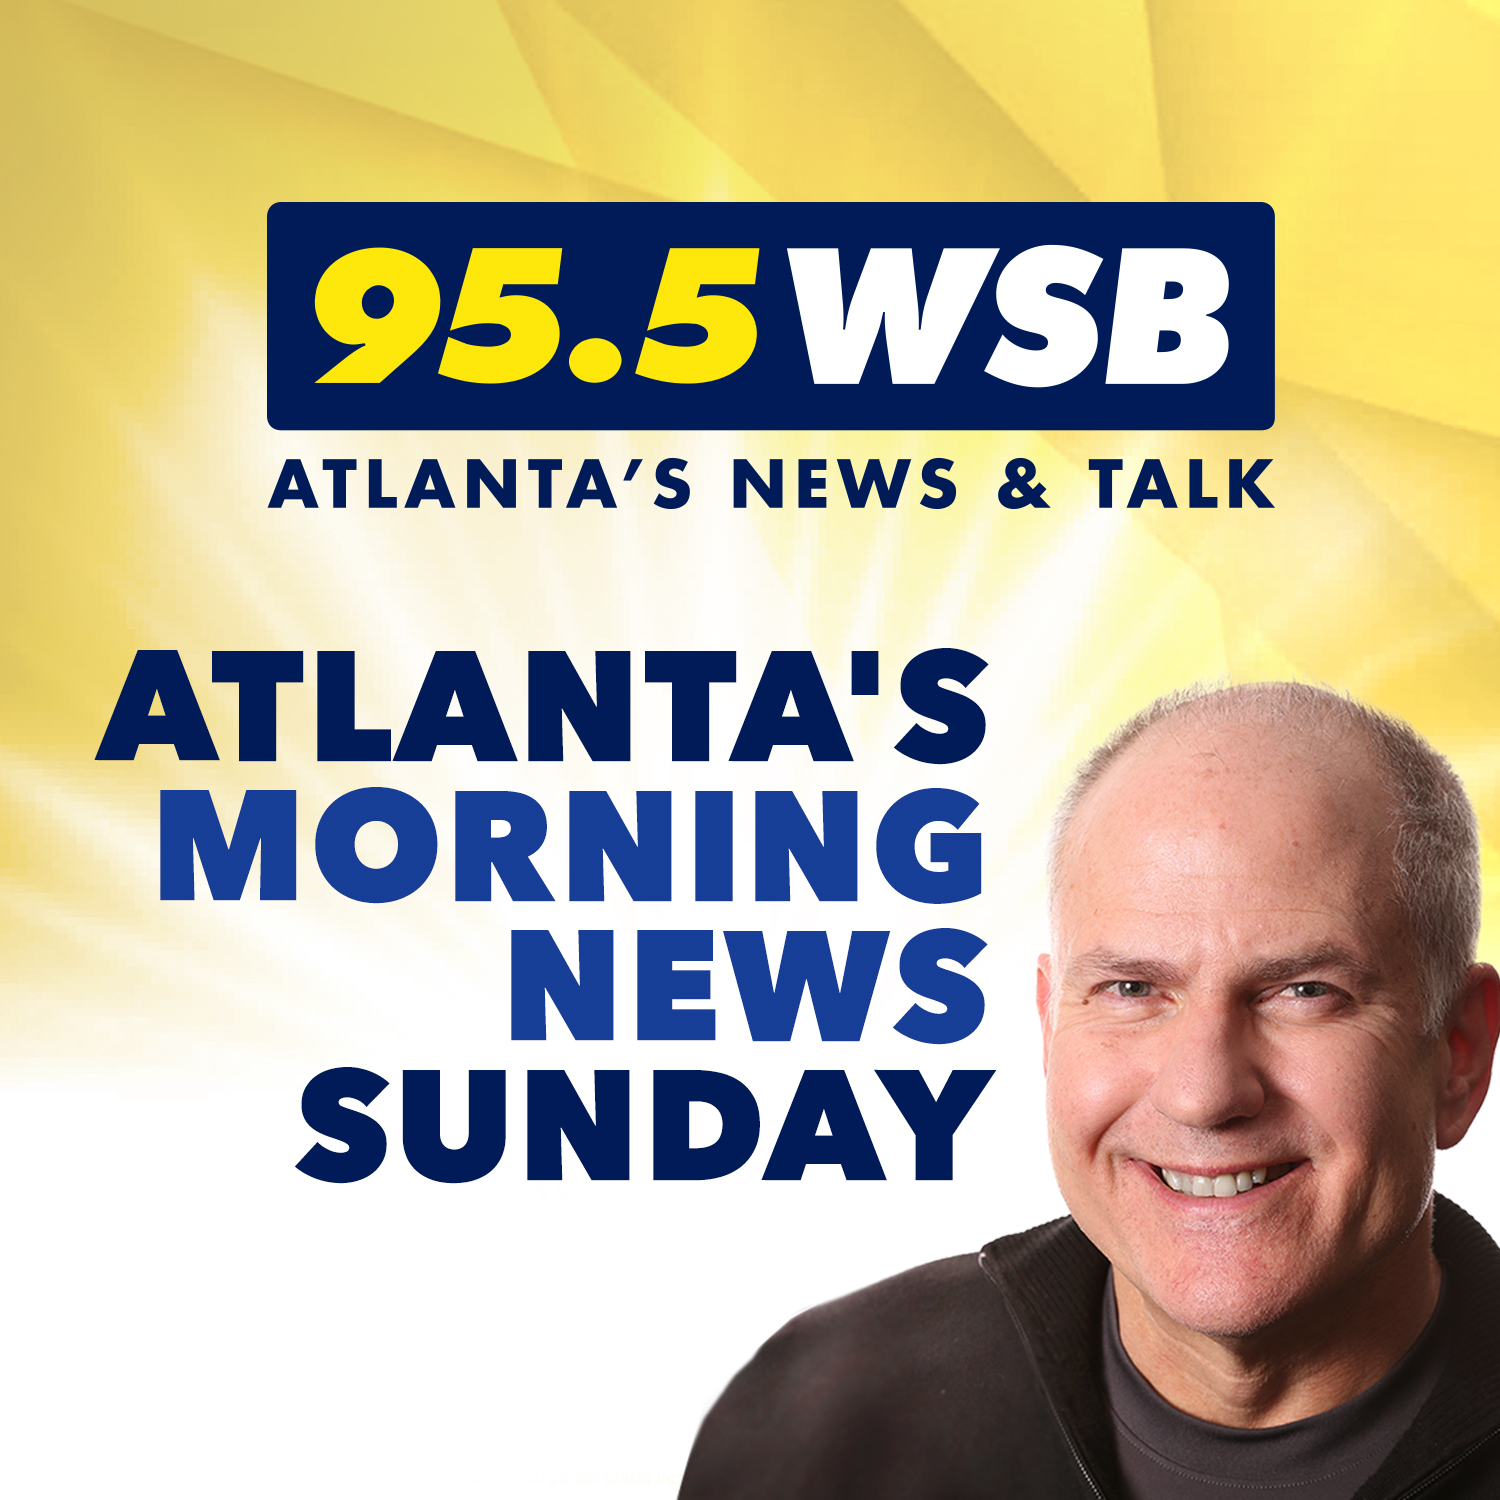 Atlanta’s Morning News Sunday Edition